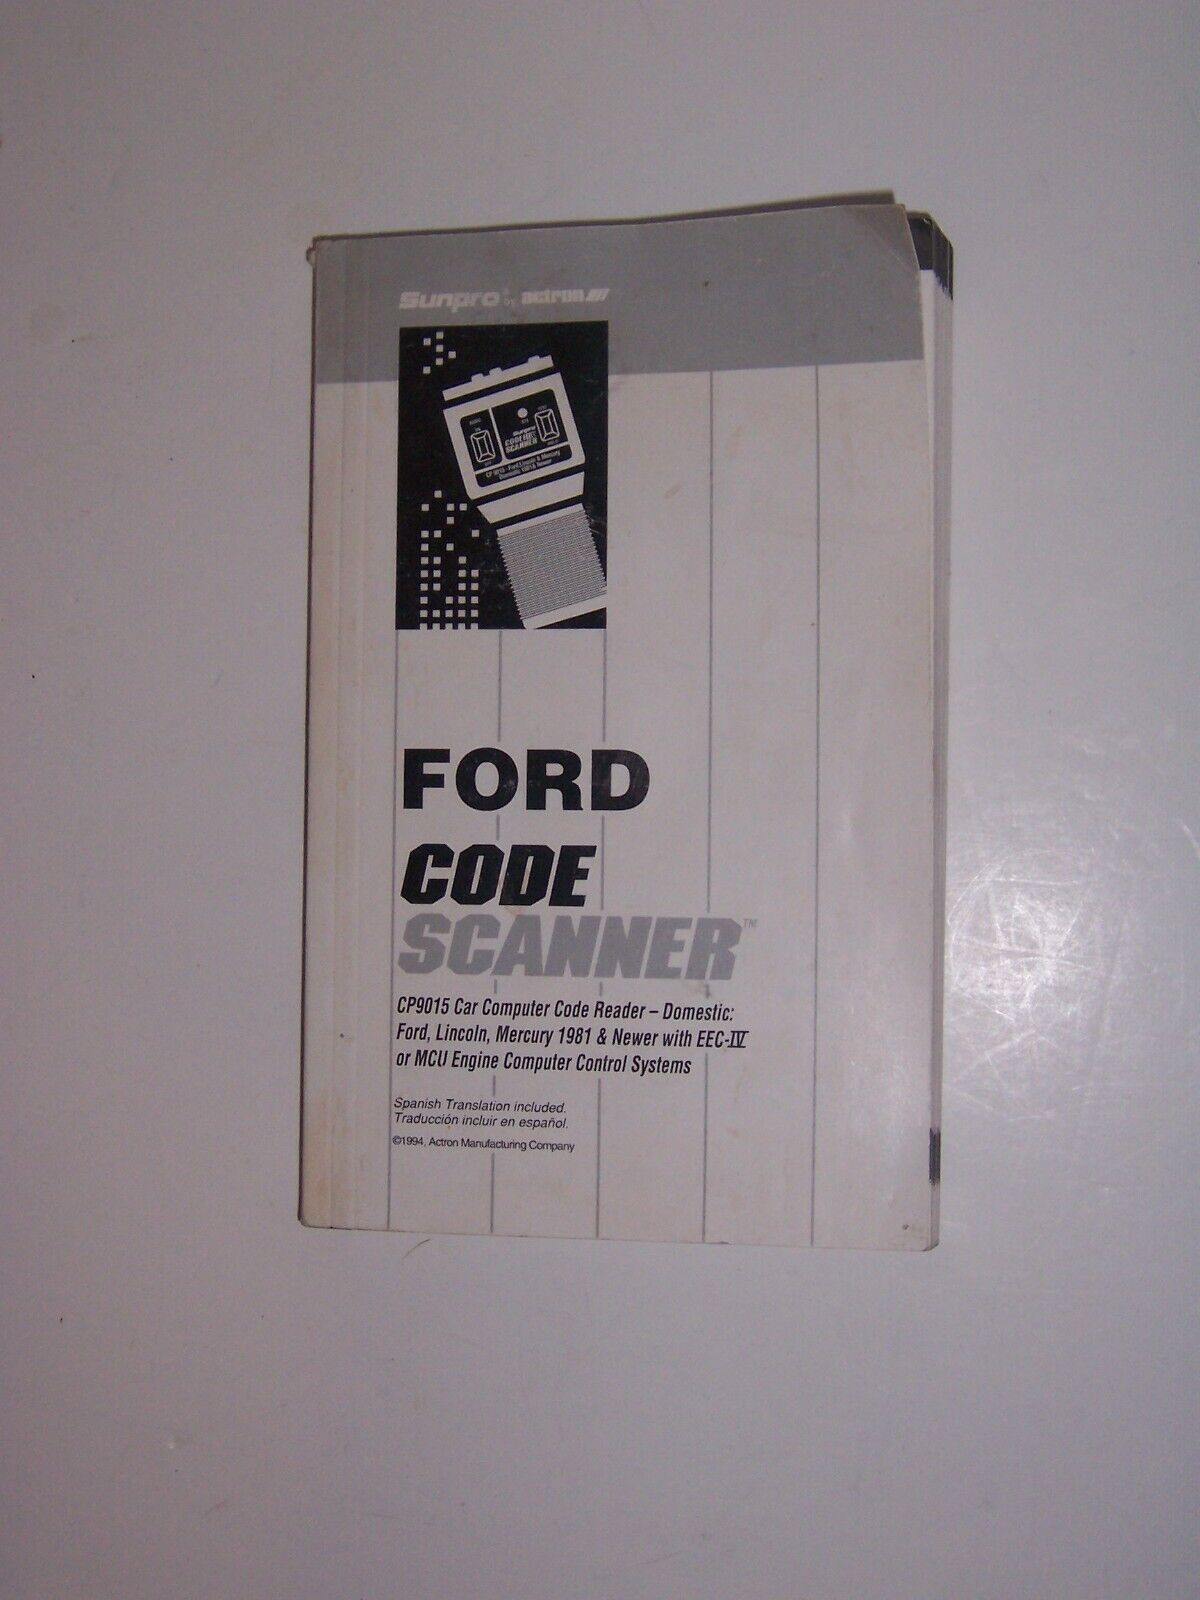 Sunpro Actron III Ford Code Scanner Manual CP9015 Car Computer Reader Book 